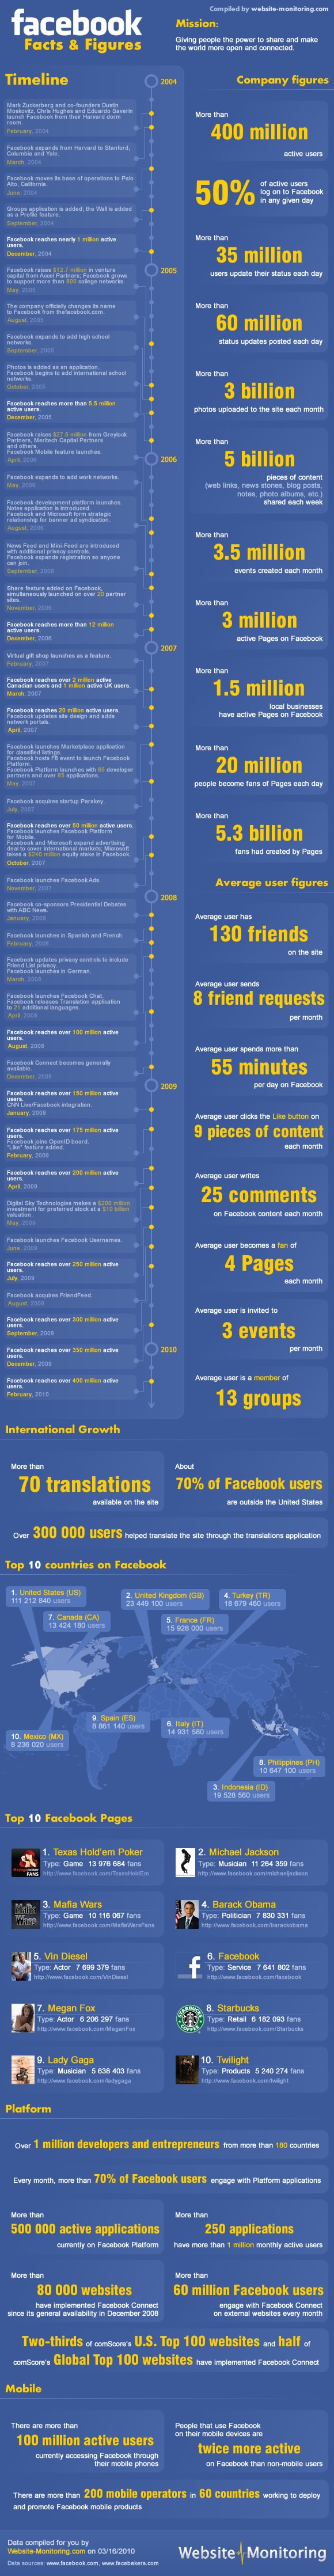 Facebook Facts & Figures (history & statistics)